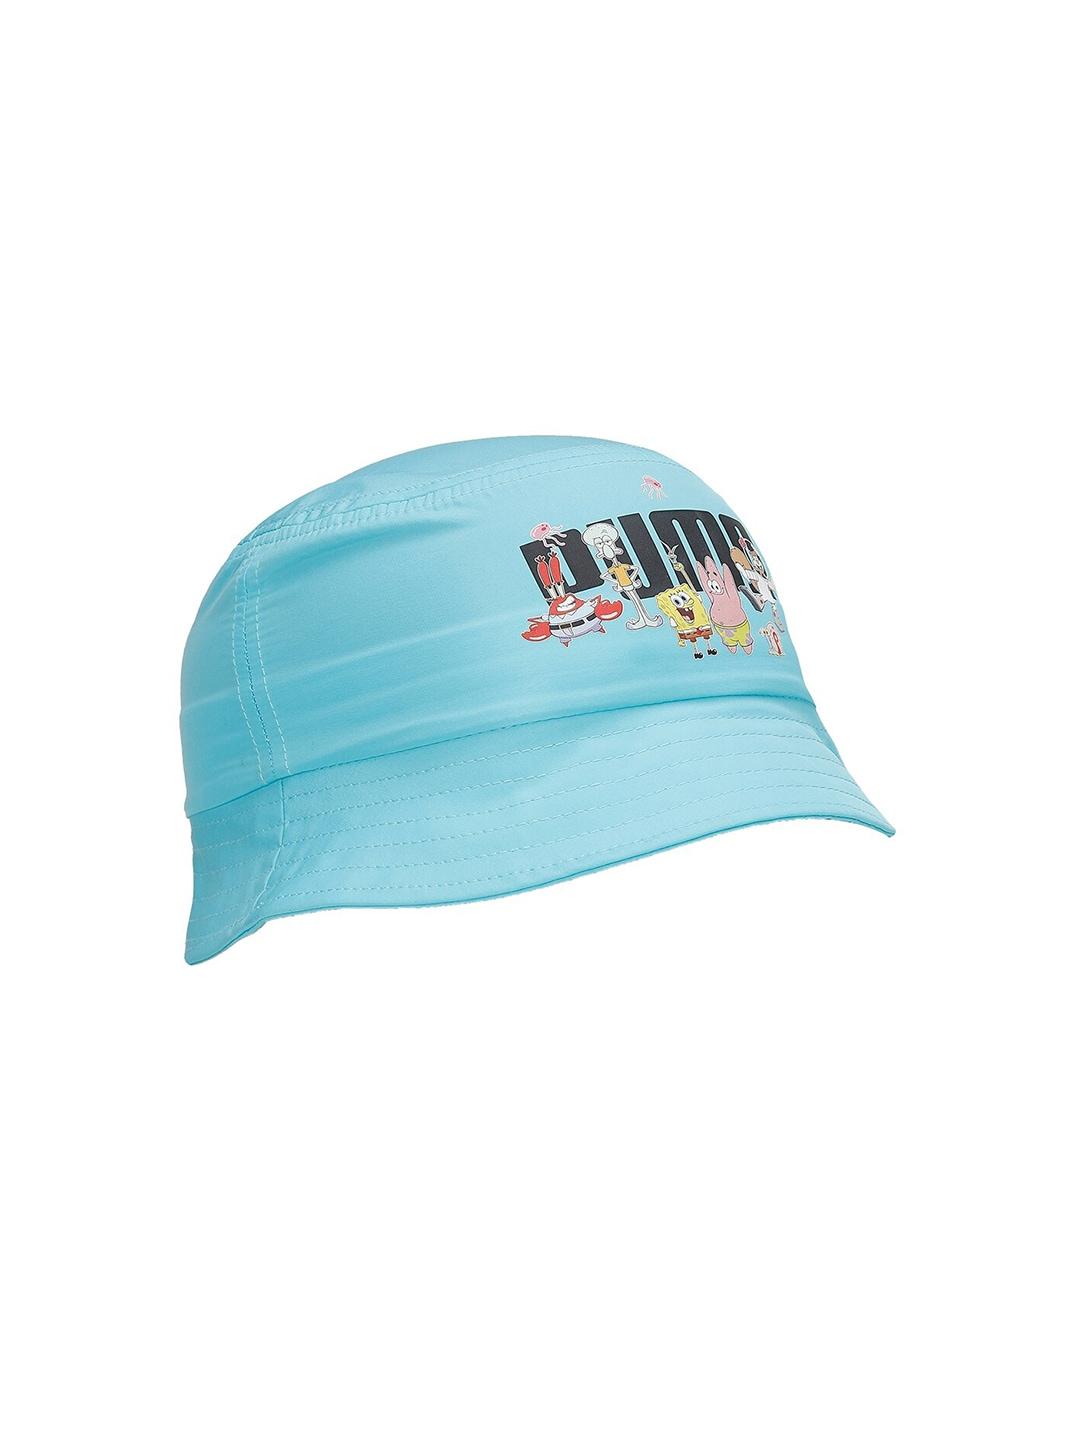 puma-unisex-spongebob-printed-bucket-hat